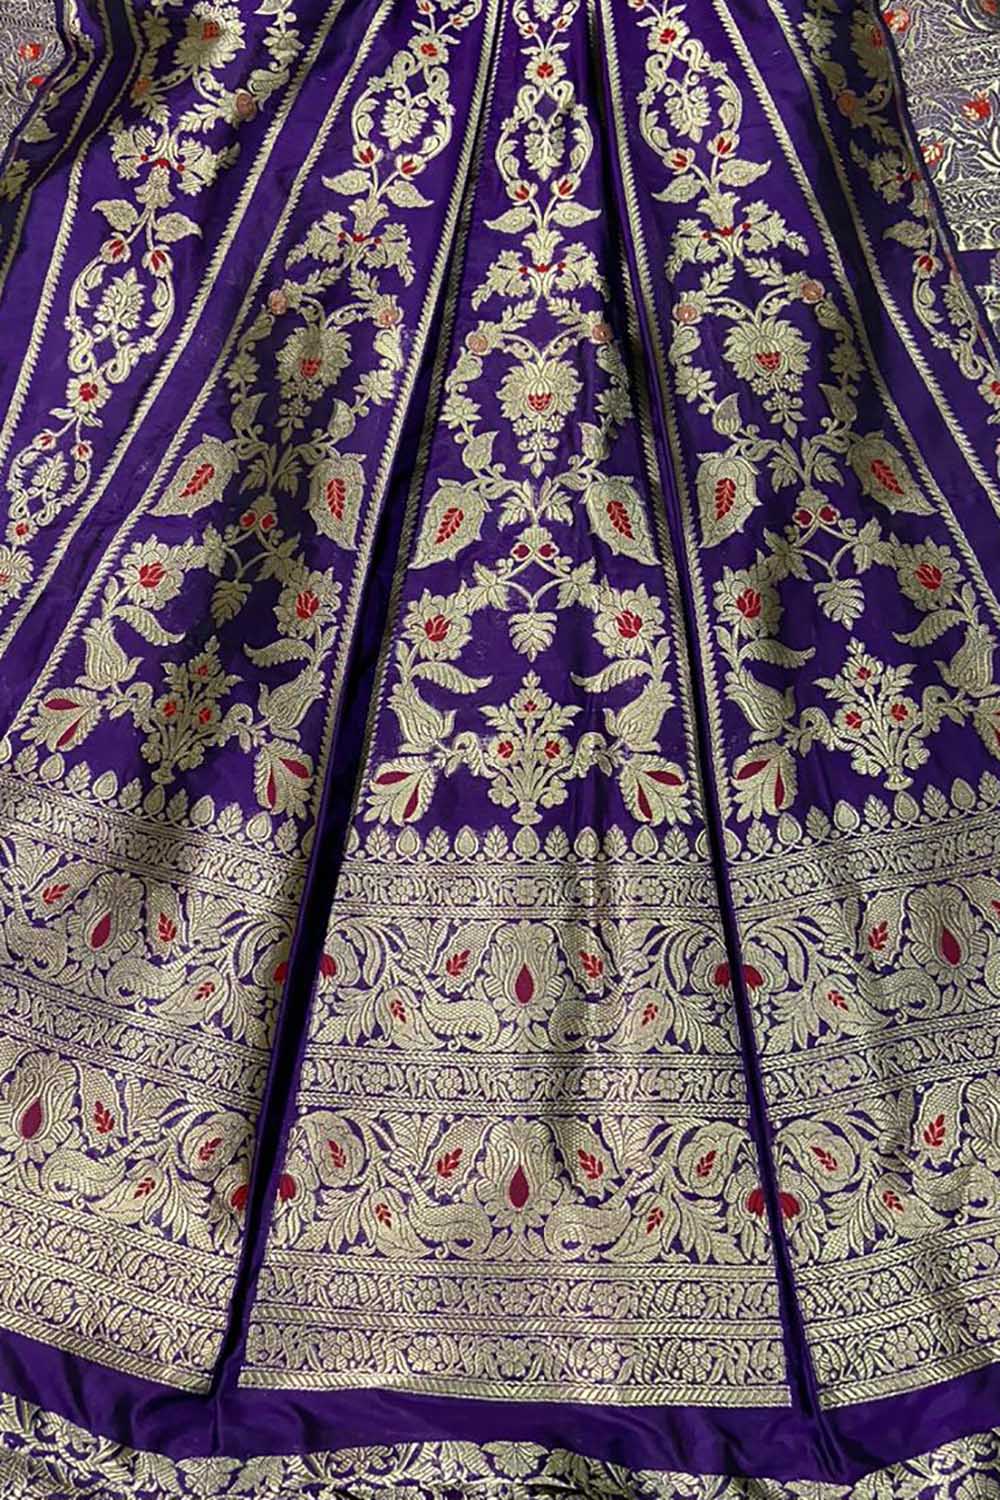 Liril Embelished Banarasi Silk Lehenga With Intricate Zari Work, Unstitched  Blouse, And Matching Dupatta.